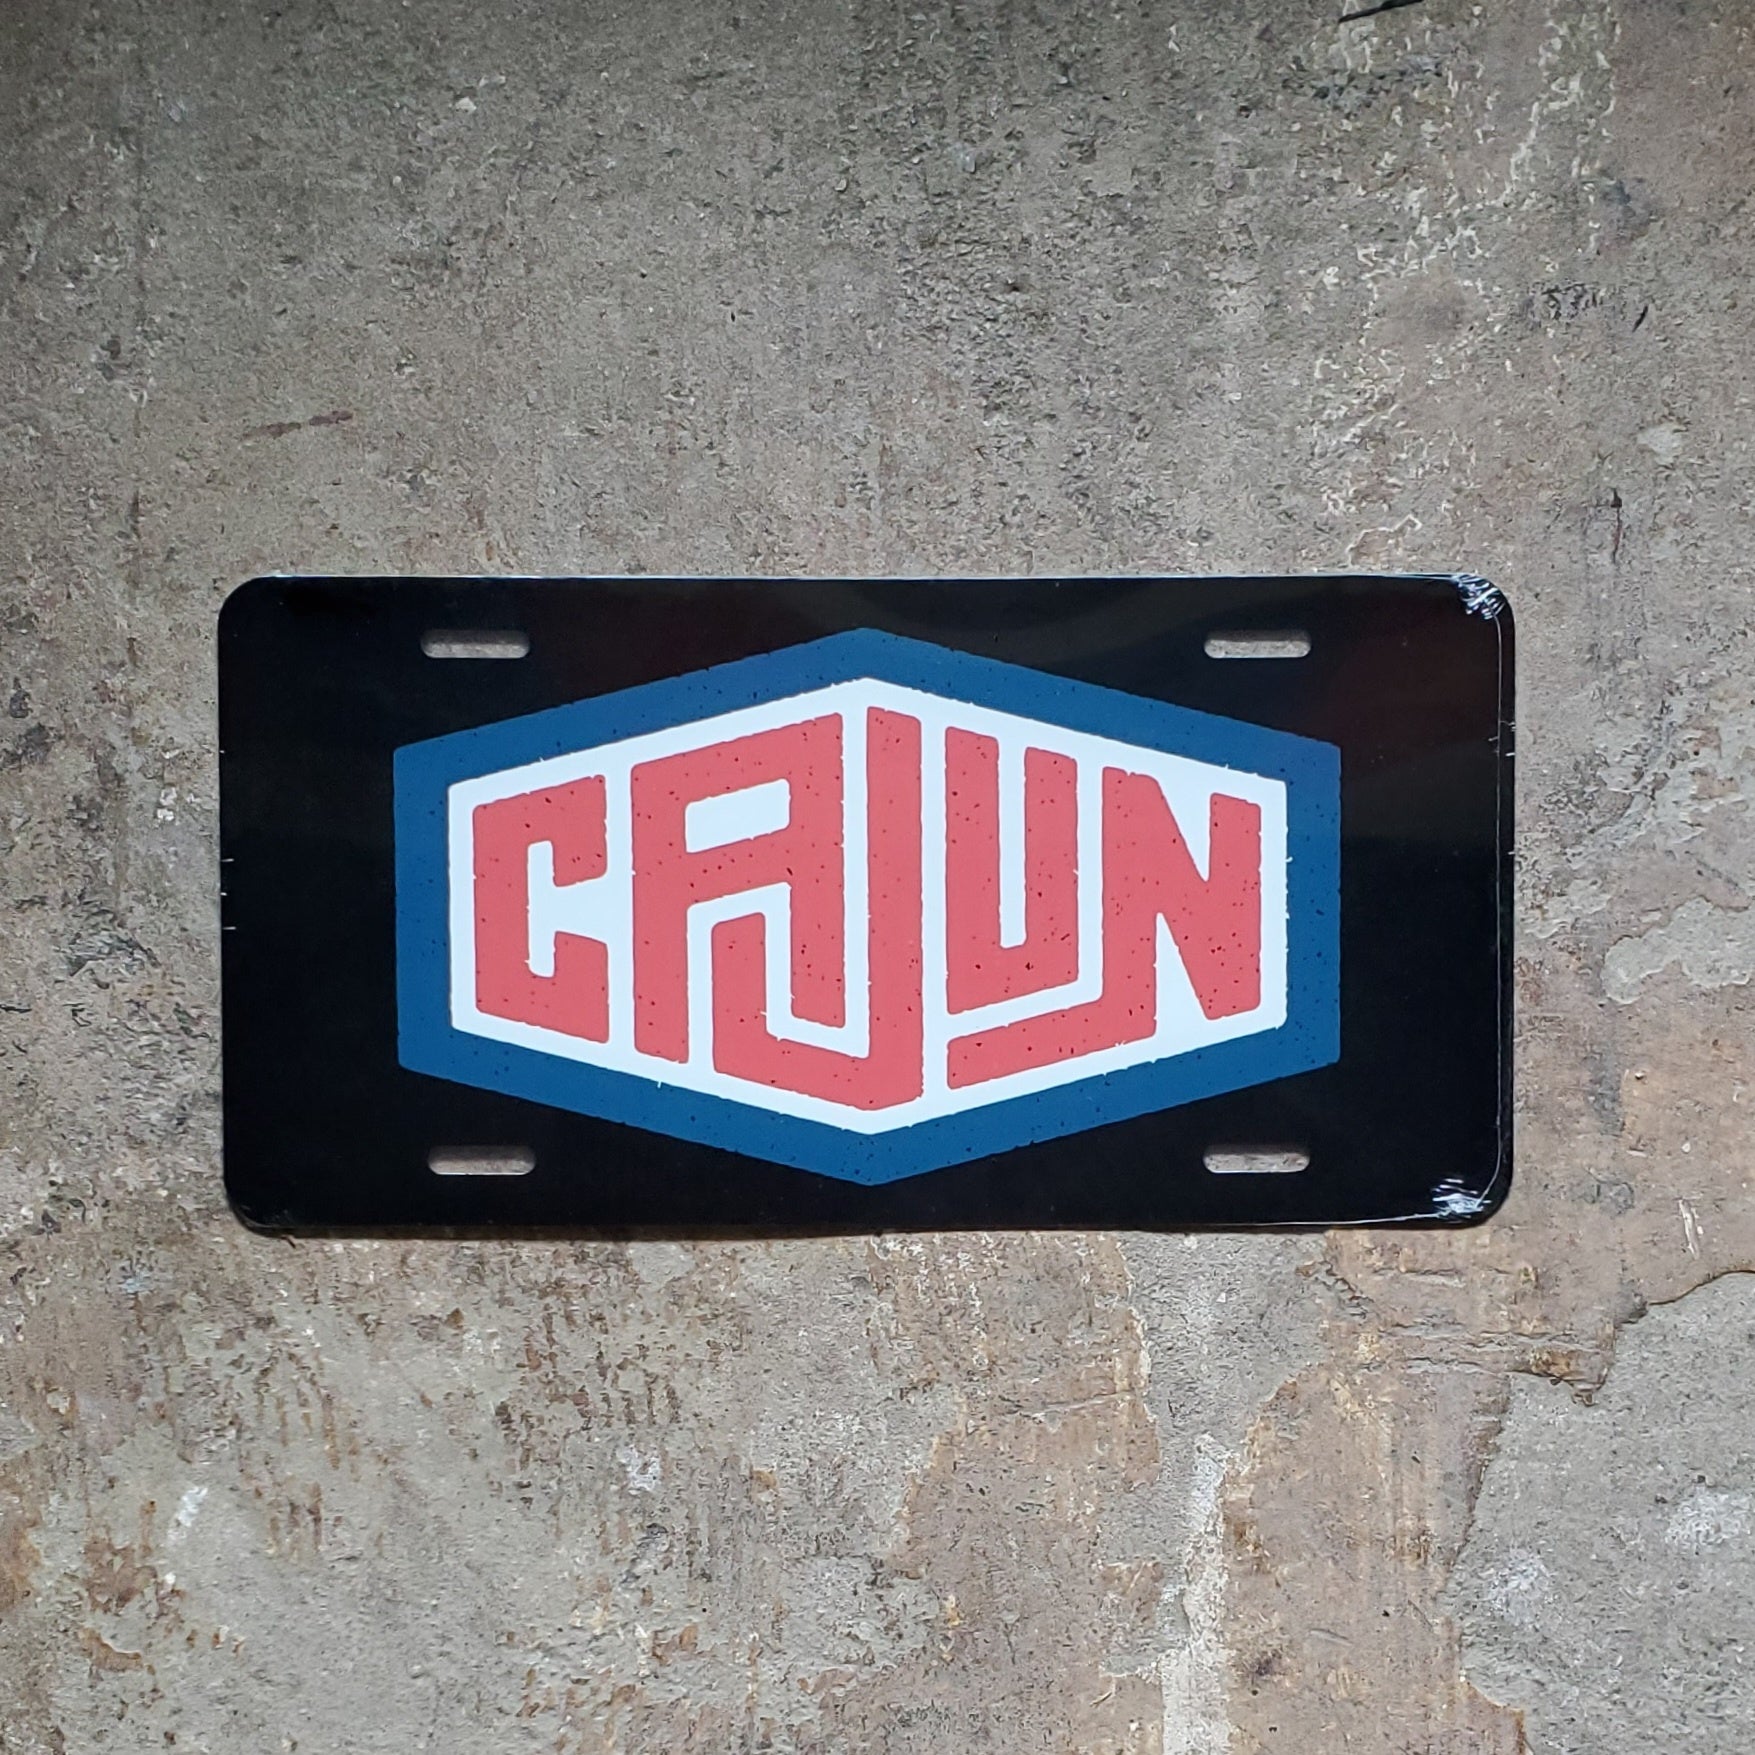 cajun-logo-license-plate